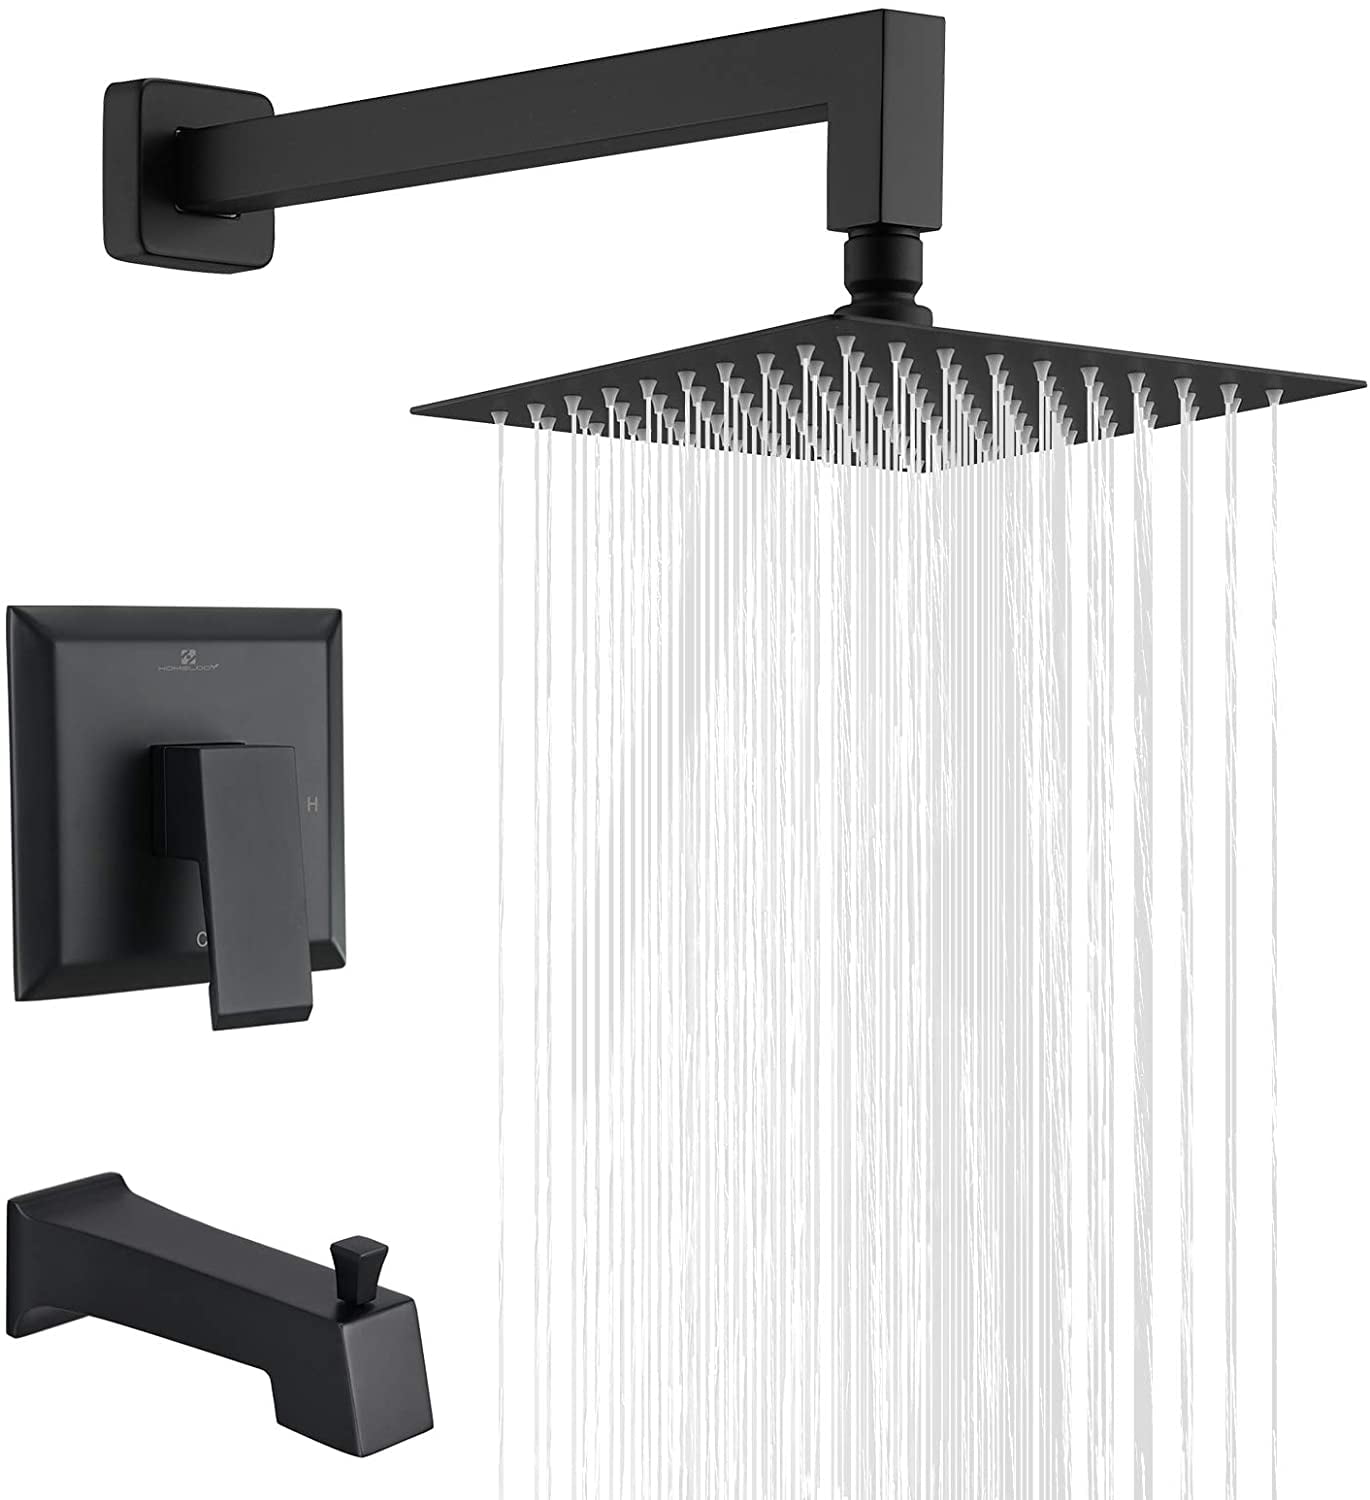 Black 8" Ceiling Mount Rain Shower Head 2-Way Mixer Valve Hand Shower Faucet Tap